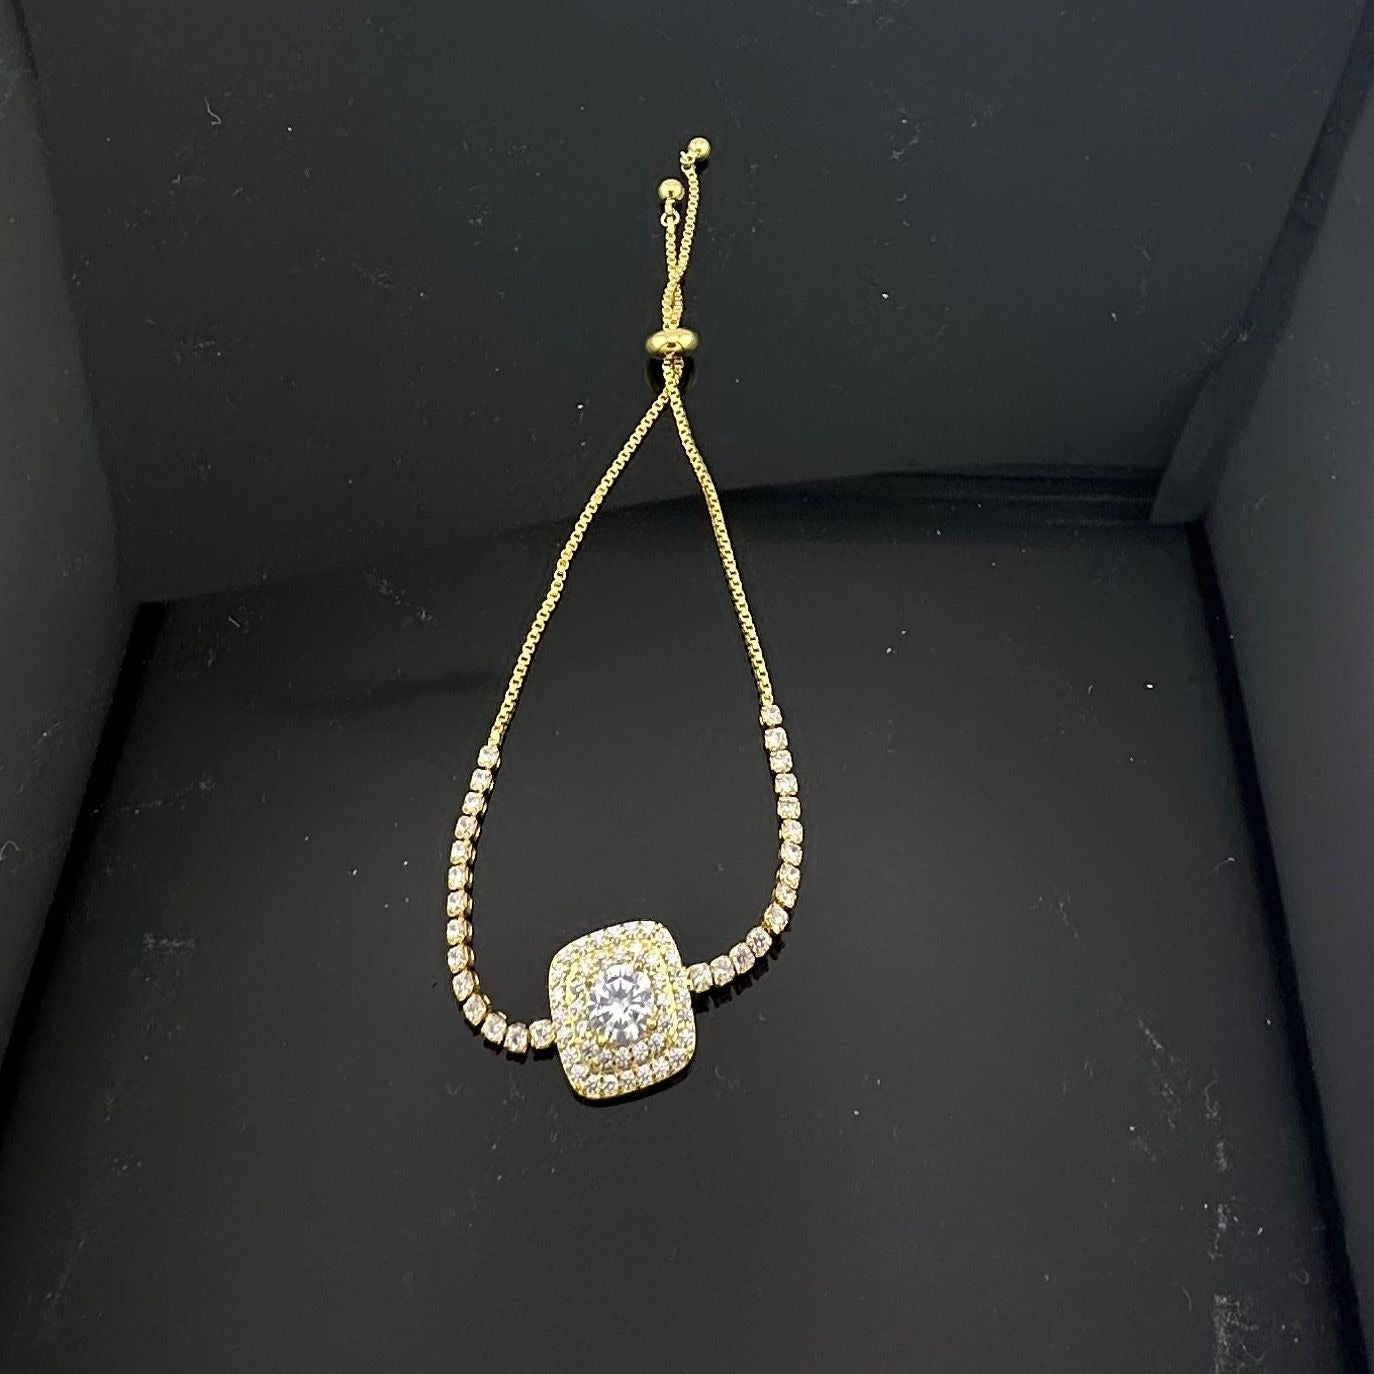 14kt Gold Plated Bolo Bracelet with 4.5 Carat White Topaz Gemstones